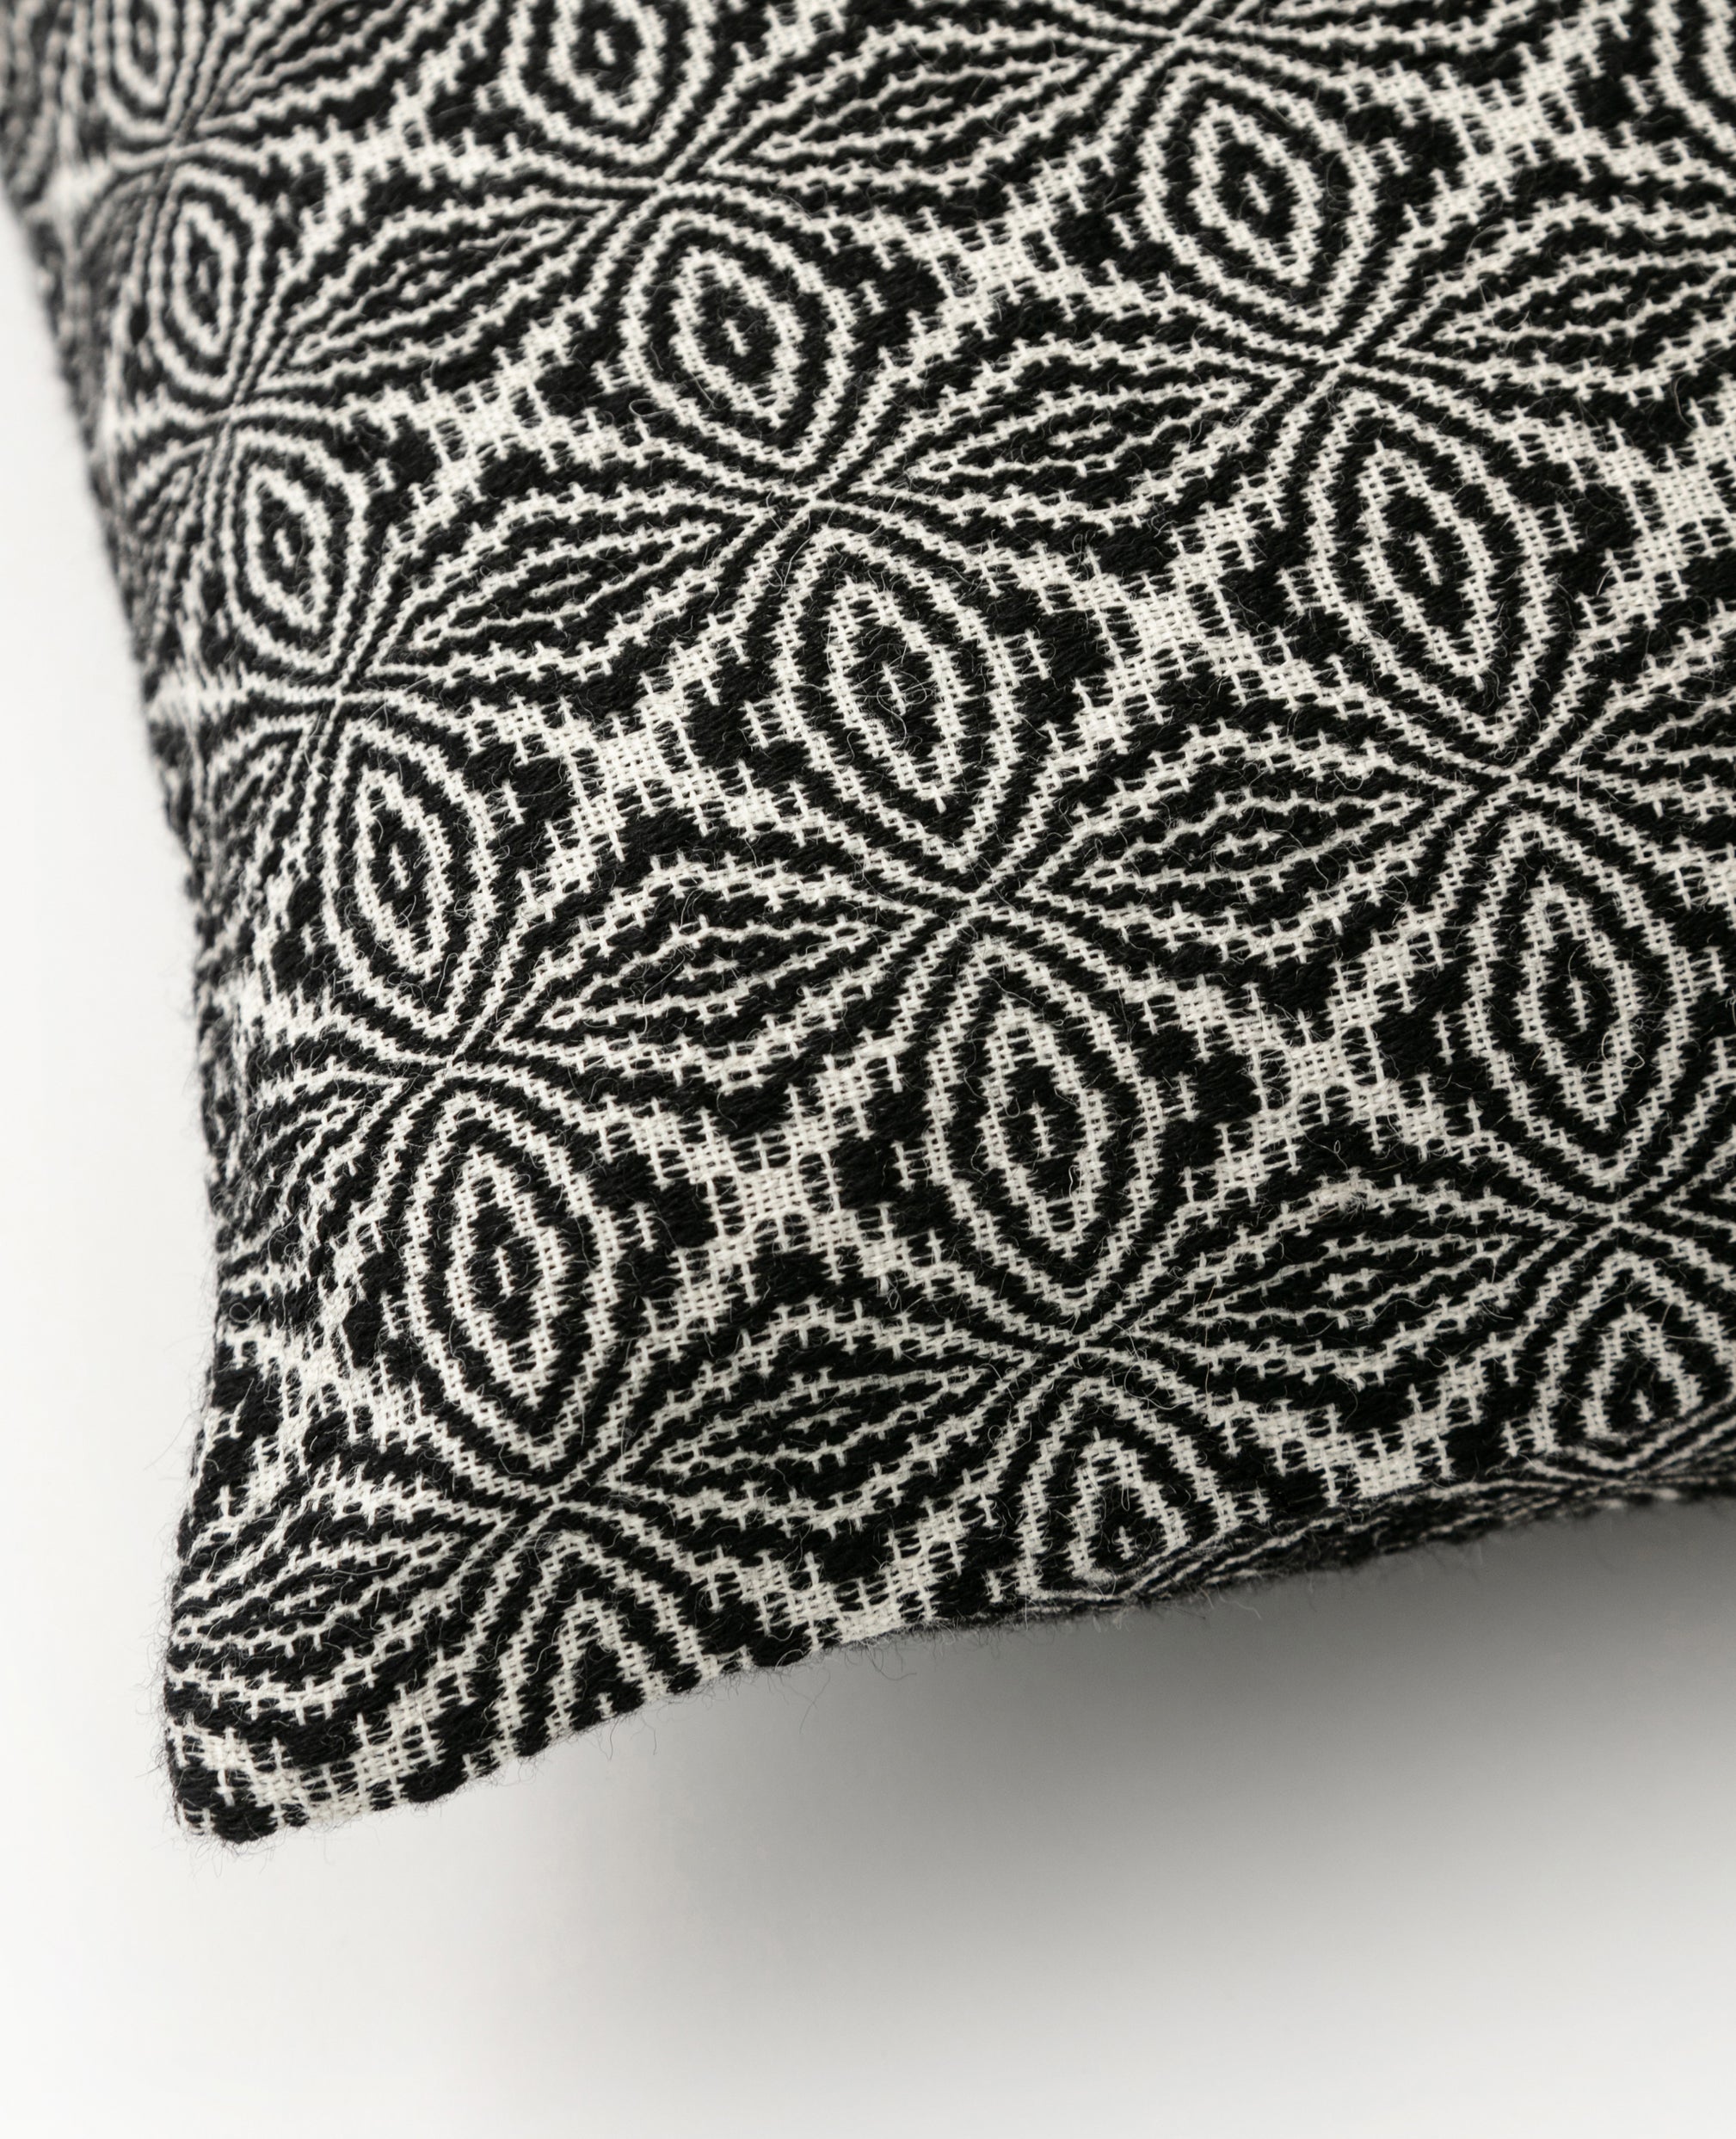 Rind overshot cushion detail